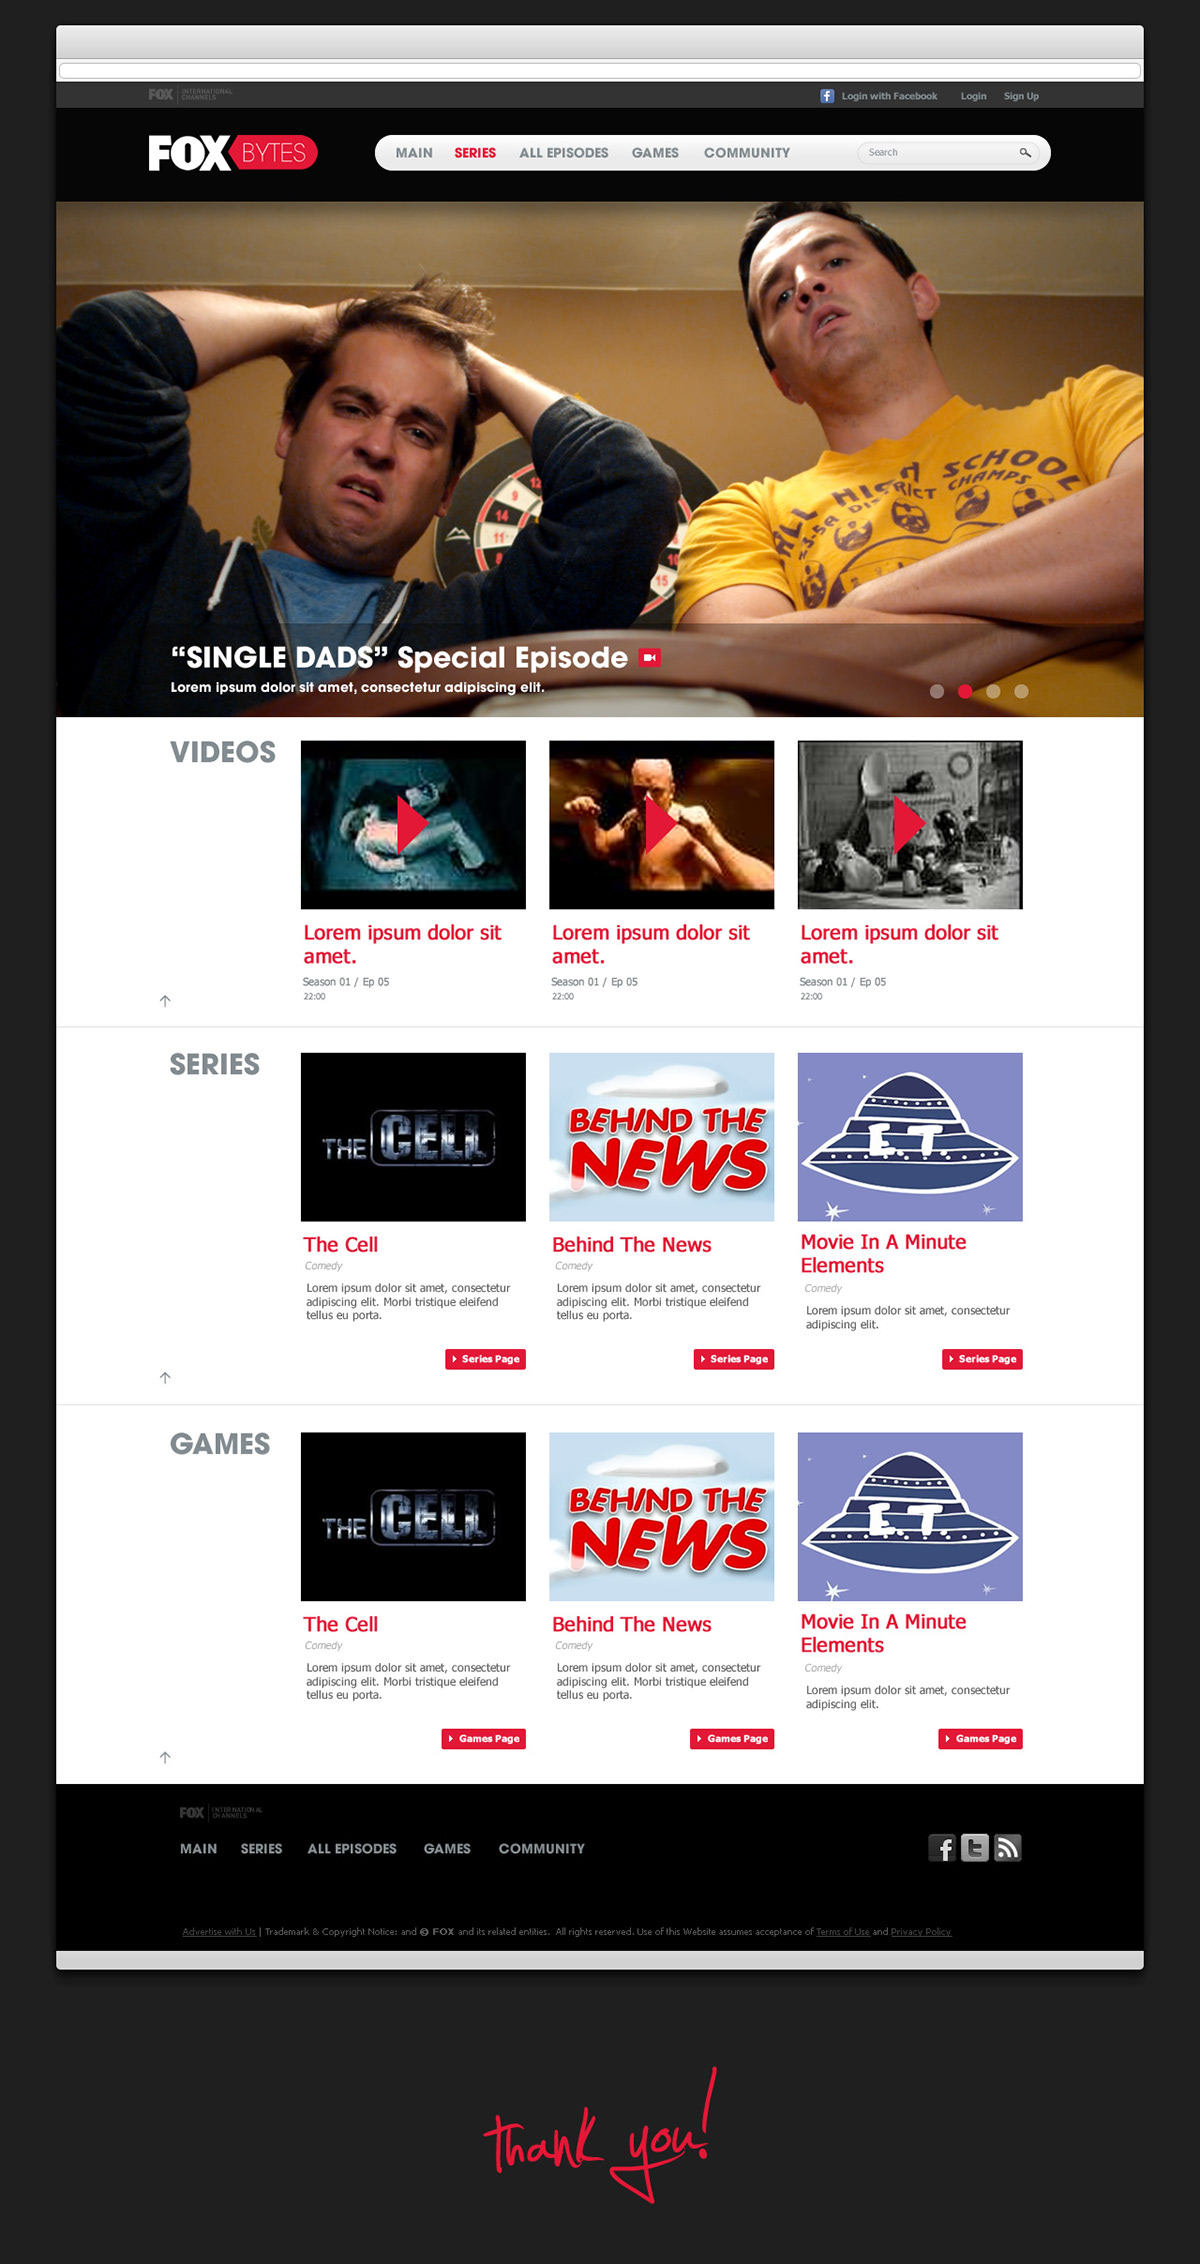 online Web Website digital tv television community user interface UI ux clean series FOX foxbytes media